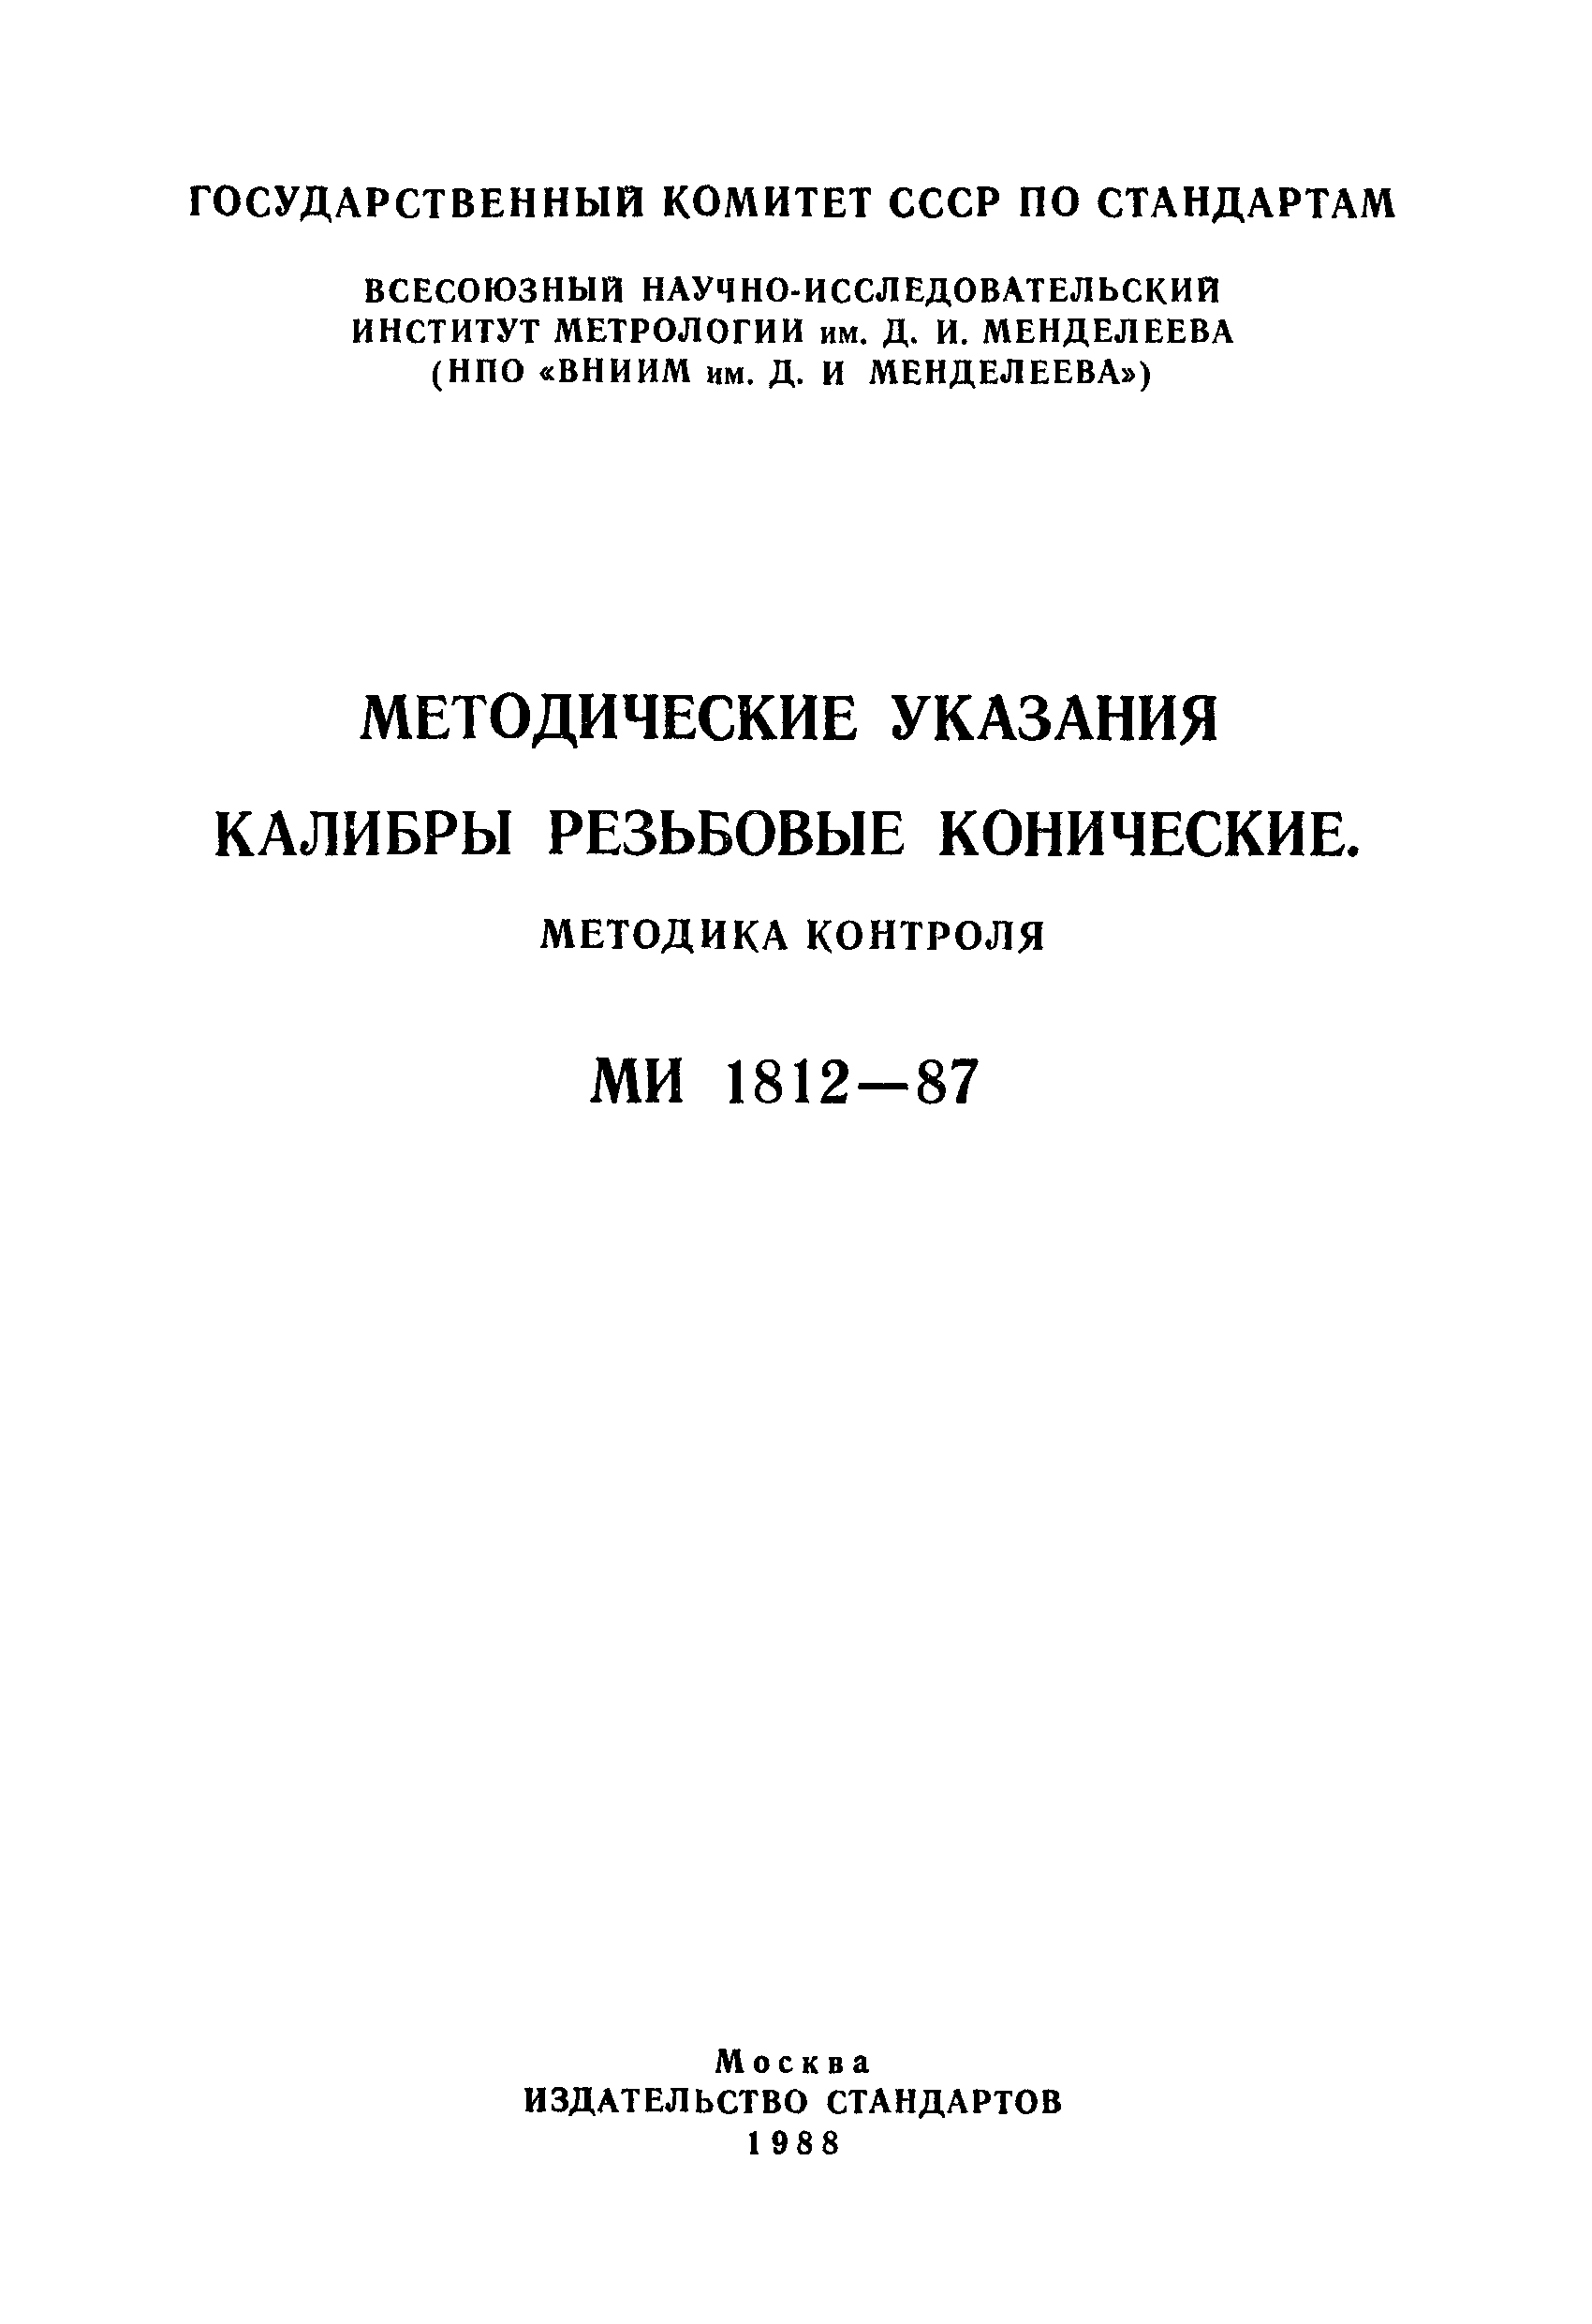 МИ 1812-87